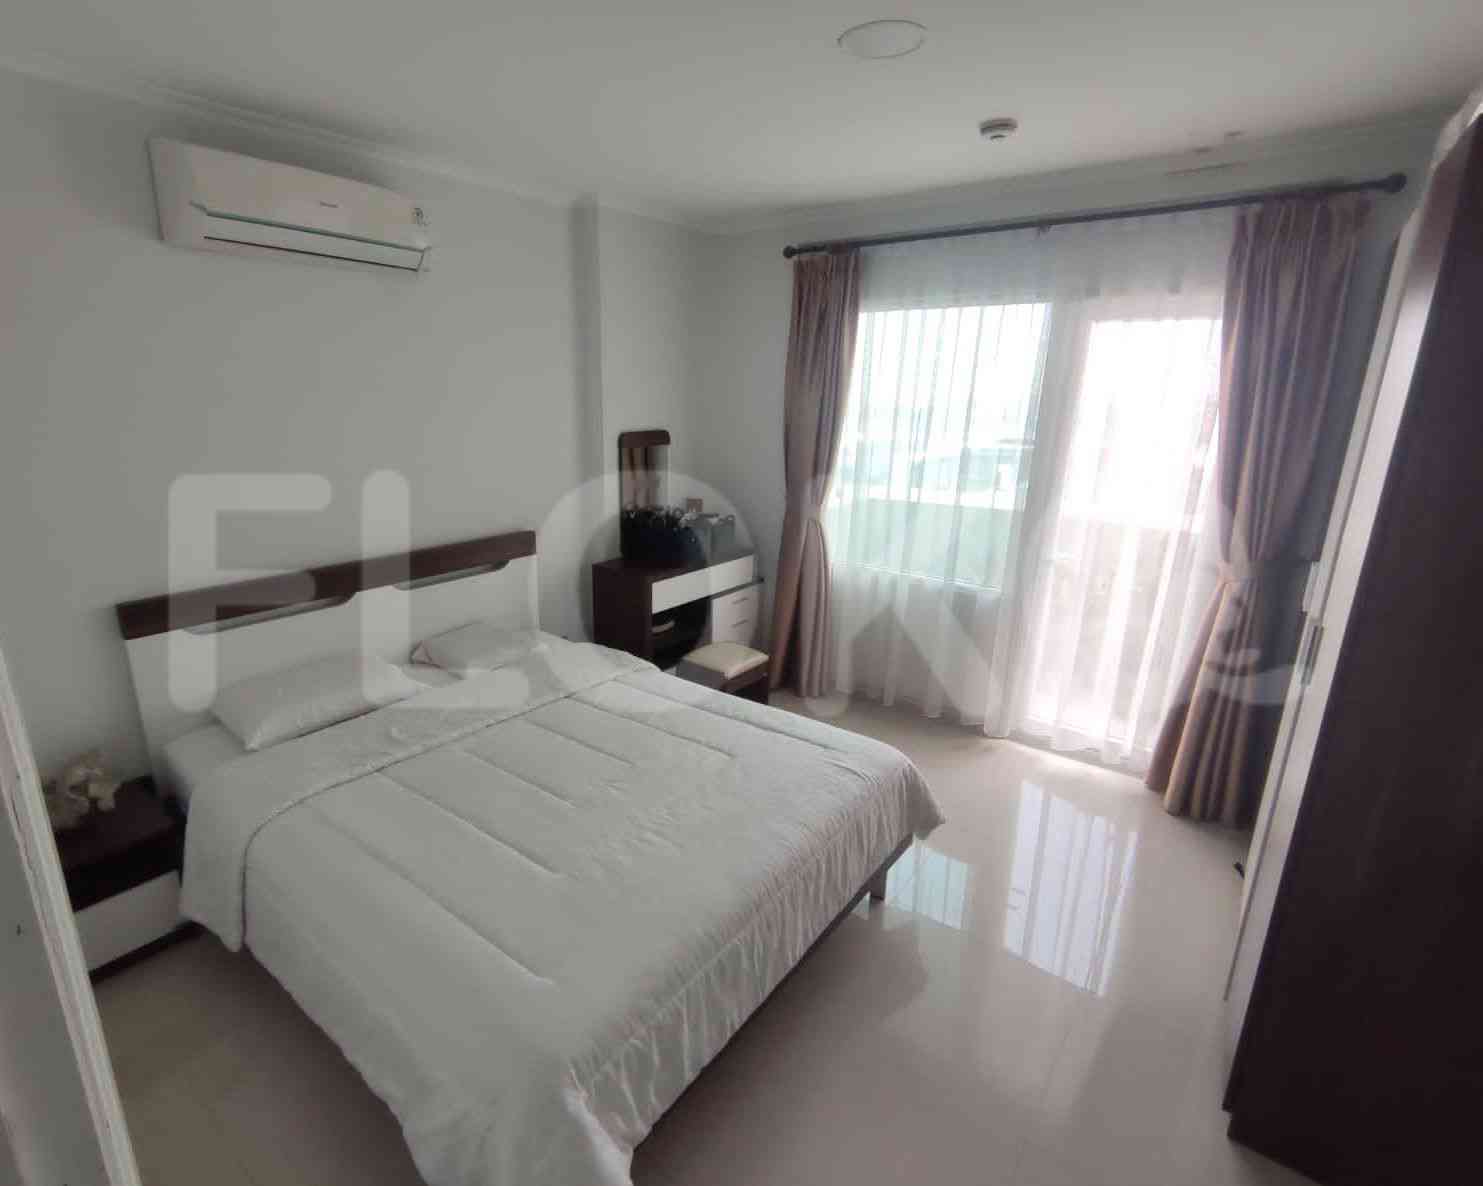 2 Bedroom on 24th Floor for Rent in Semanggi Apartment - fga204 3